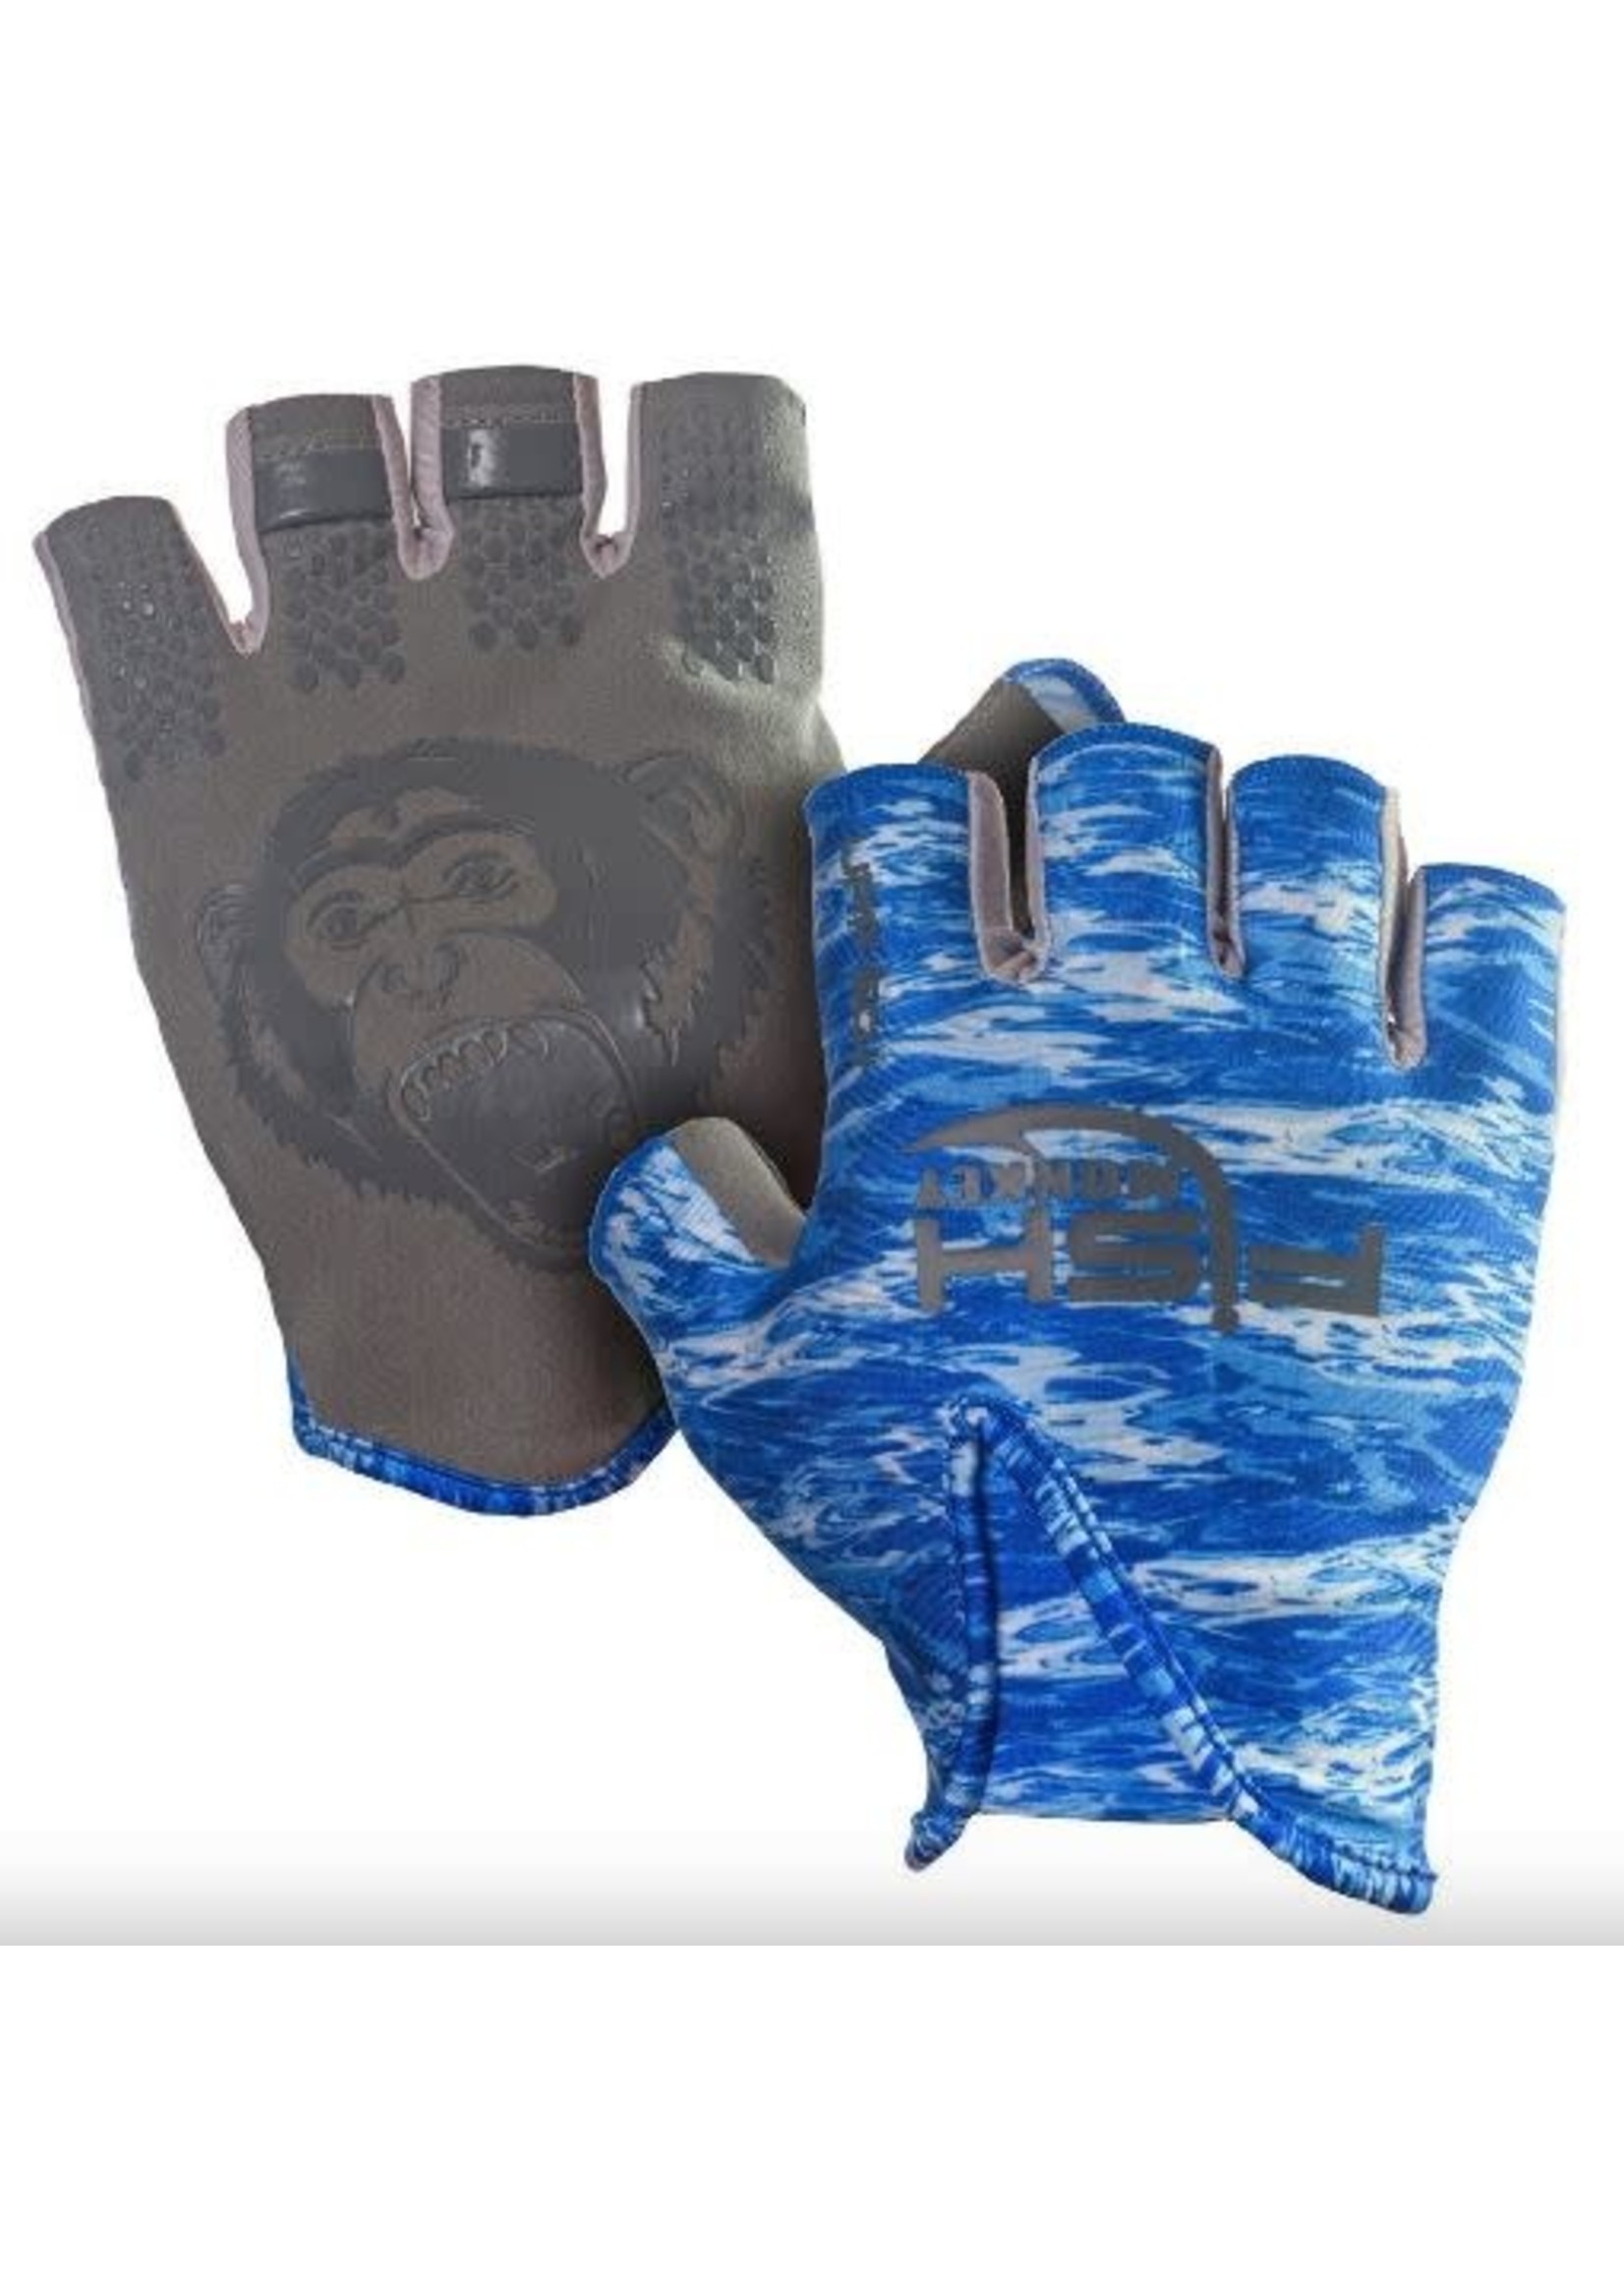 Fish Monkey Stubby Guide Gloves - Blue Water - Medium